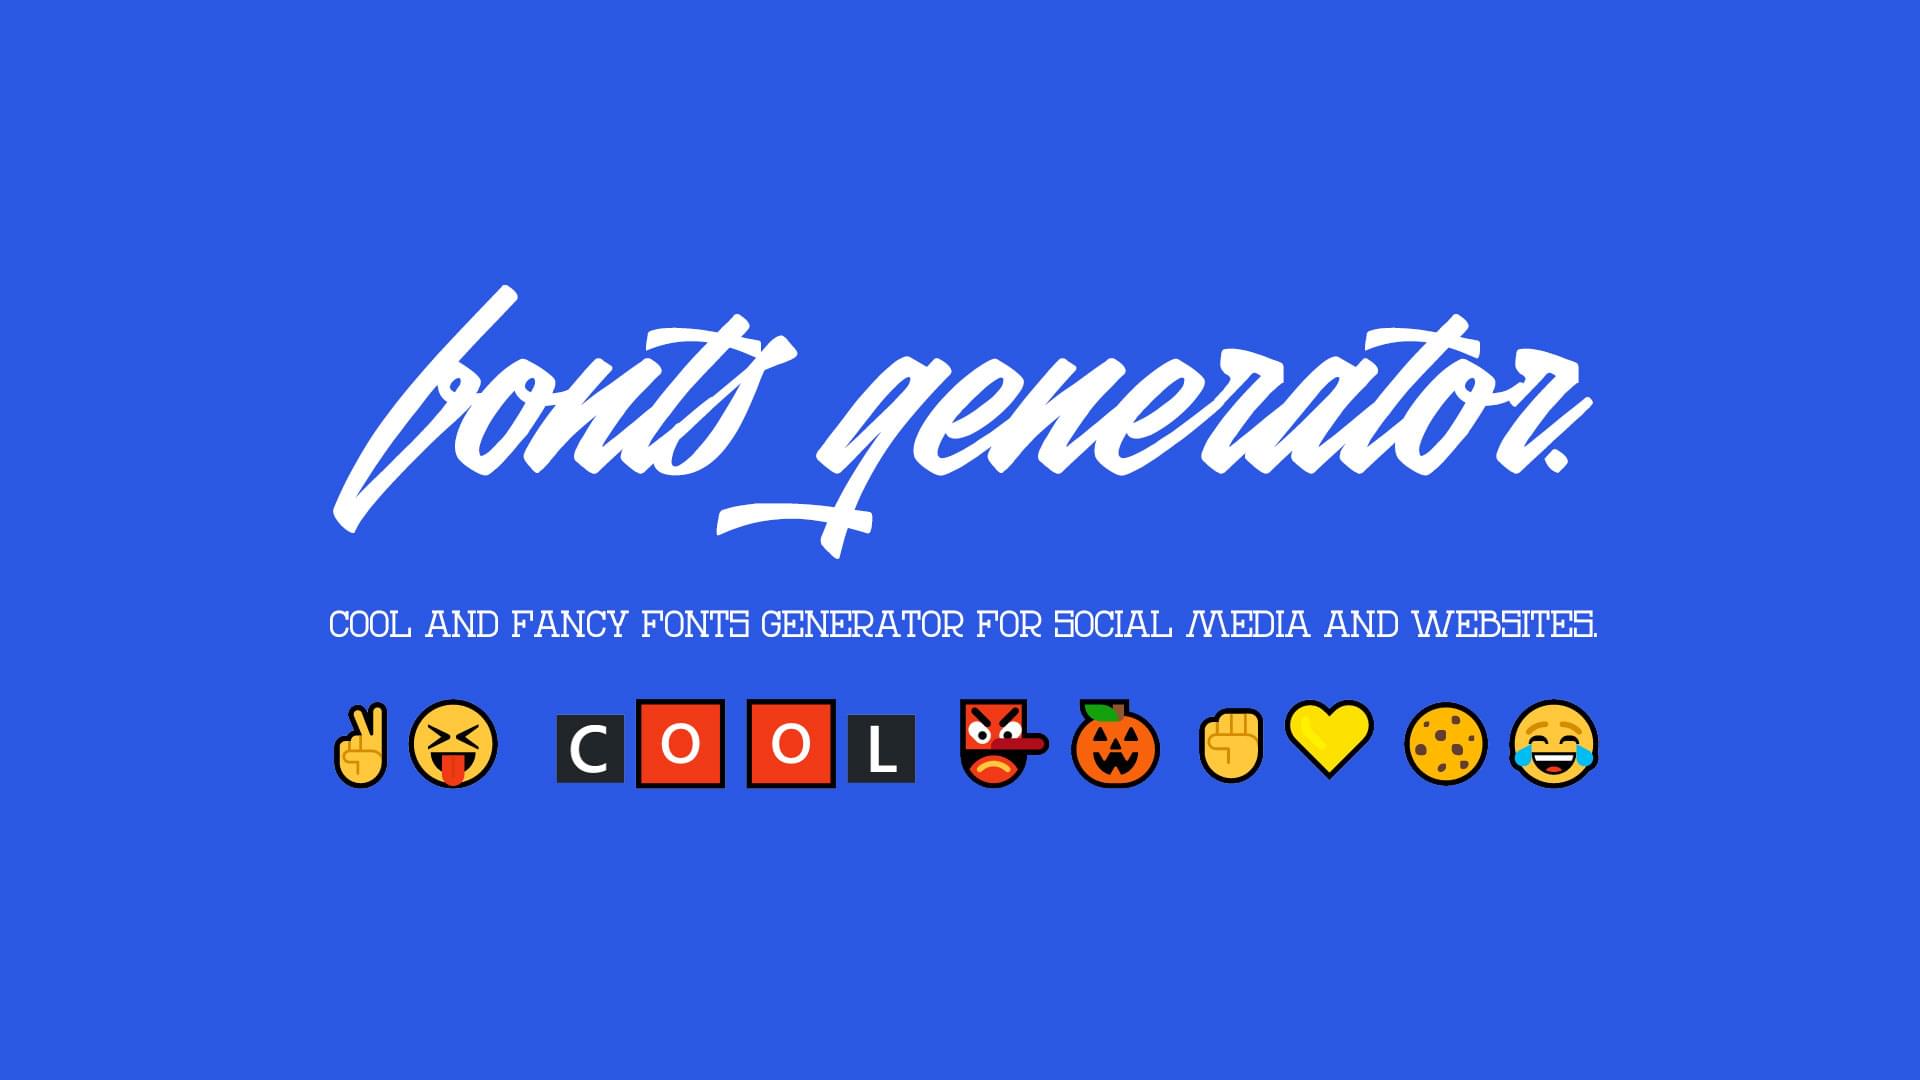 Merciful Situation maze Fonts Generator 𝖈𝖔𝖕𝖞 𝖆𝖓𝖉 𝖕𝖆𝖘𝖙𝖊 | Emoji Symbols and Lenny Faces